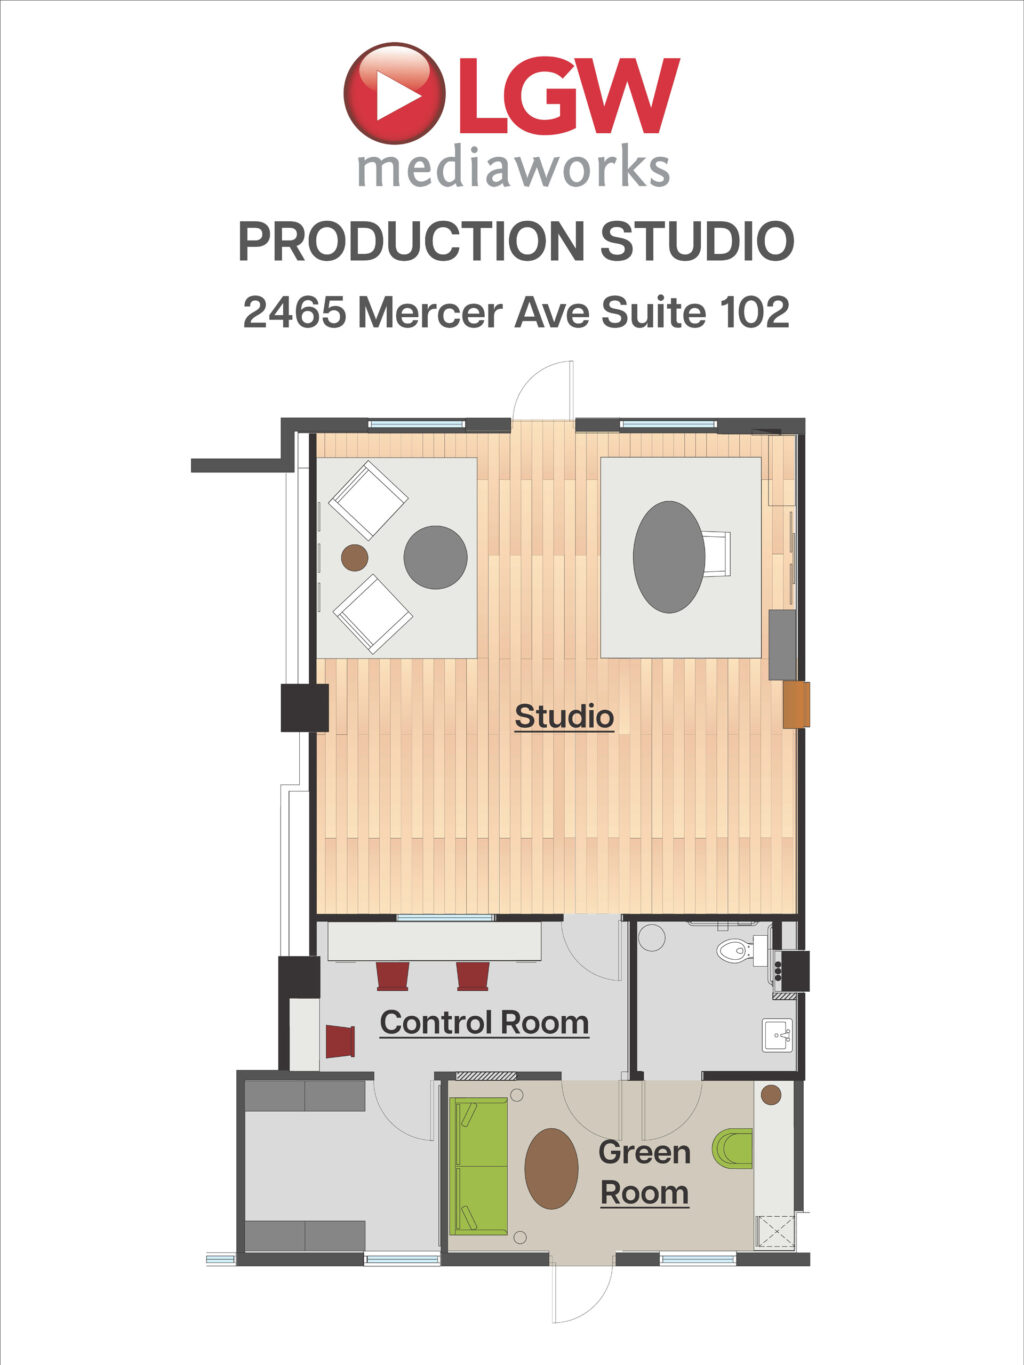 LGW mediaworks - Media Production Studio: Floorplan